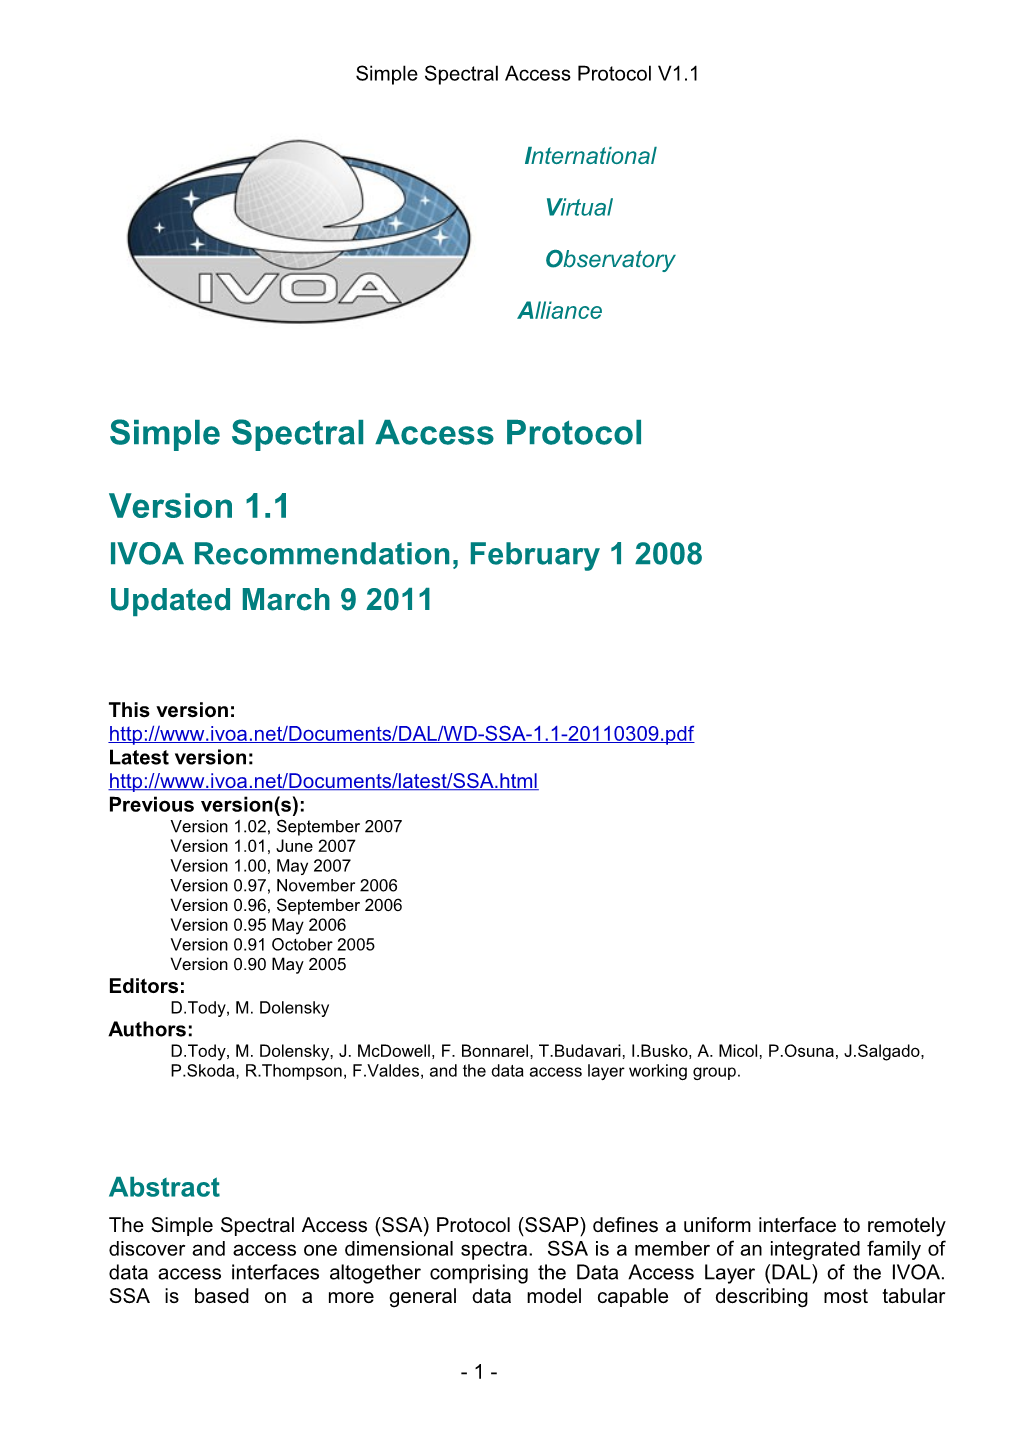 Simple Spectrum Access Protocol REC V1.03